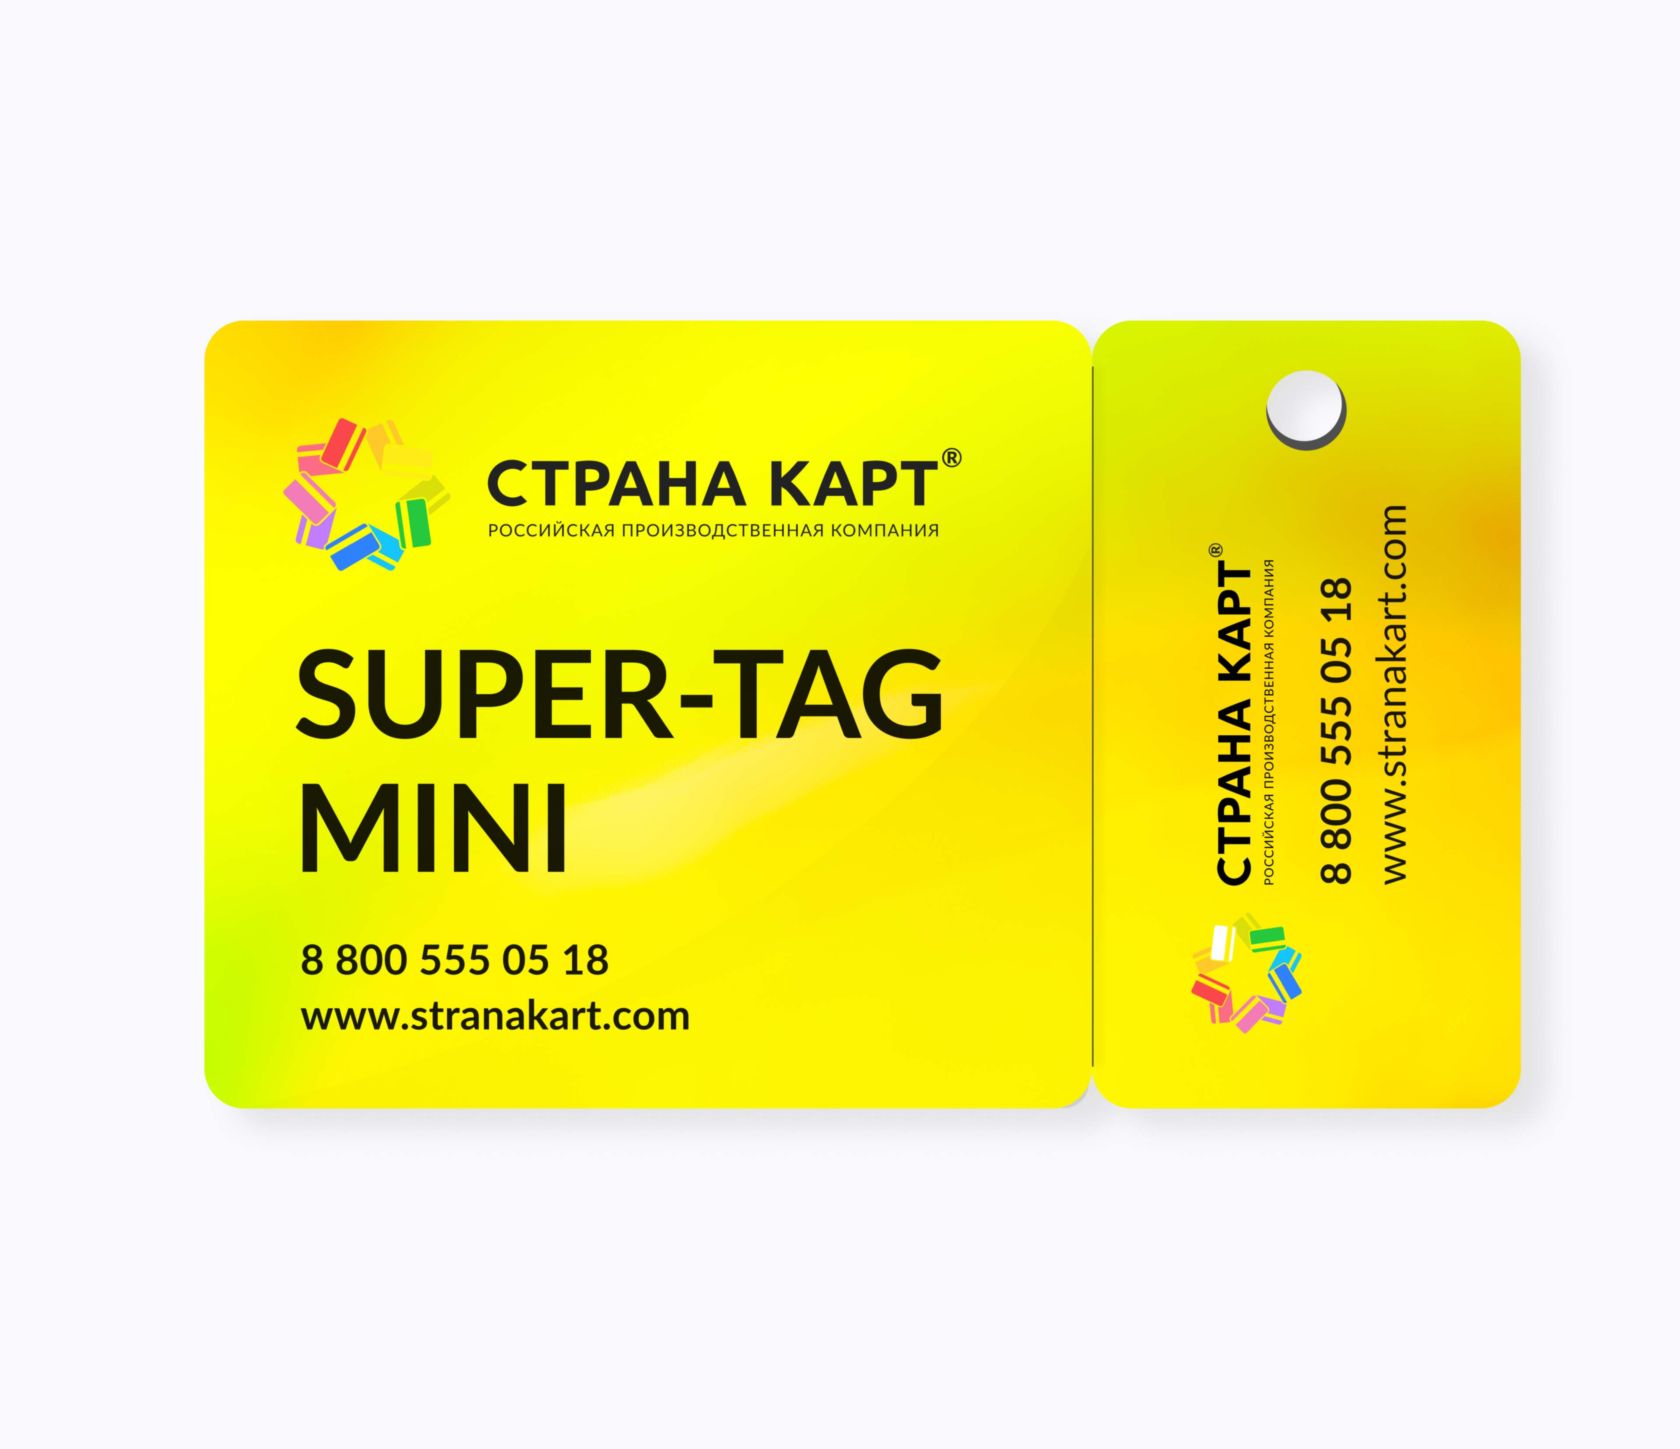 Пластиковые нестандартные букмекерские карты SUPER-TAG Mini Пластиковые нестандартные букмекерские карты